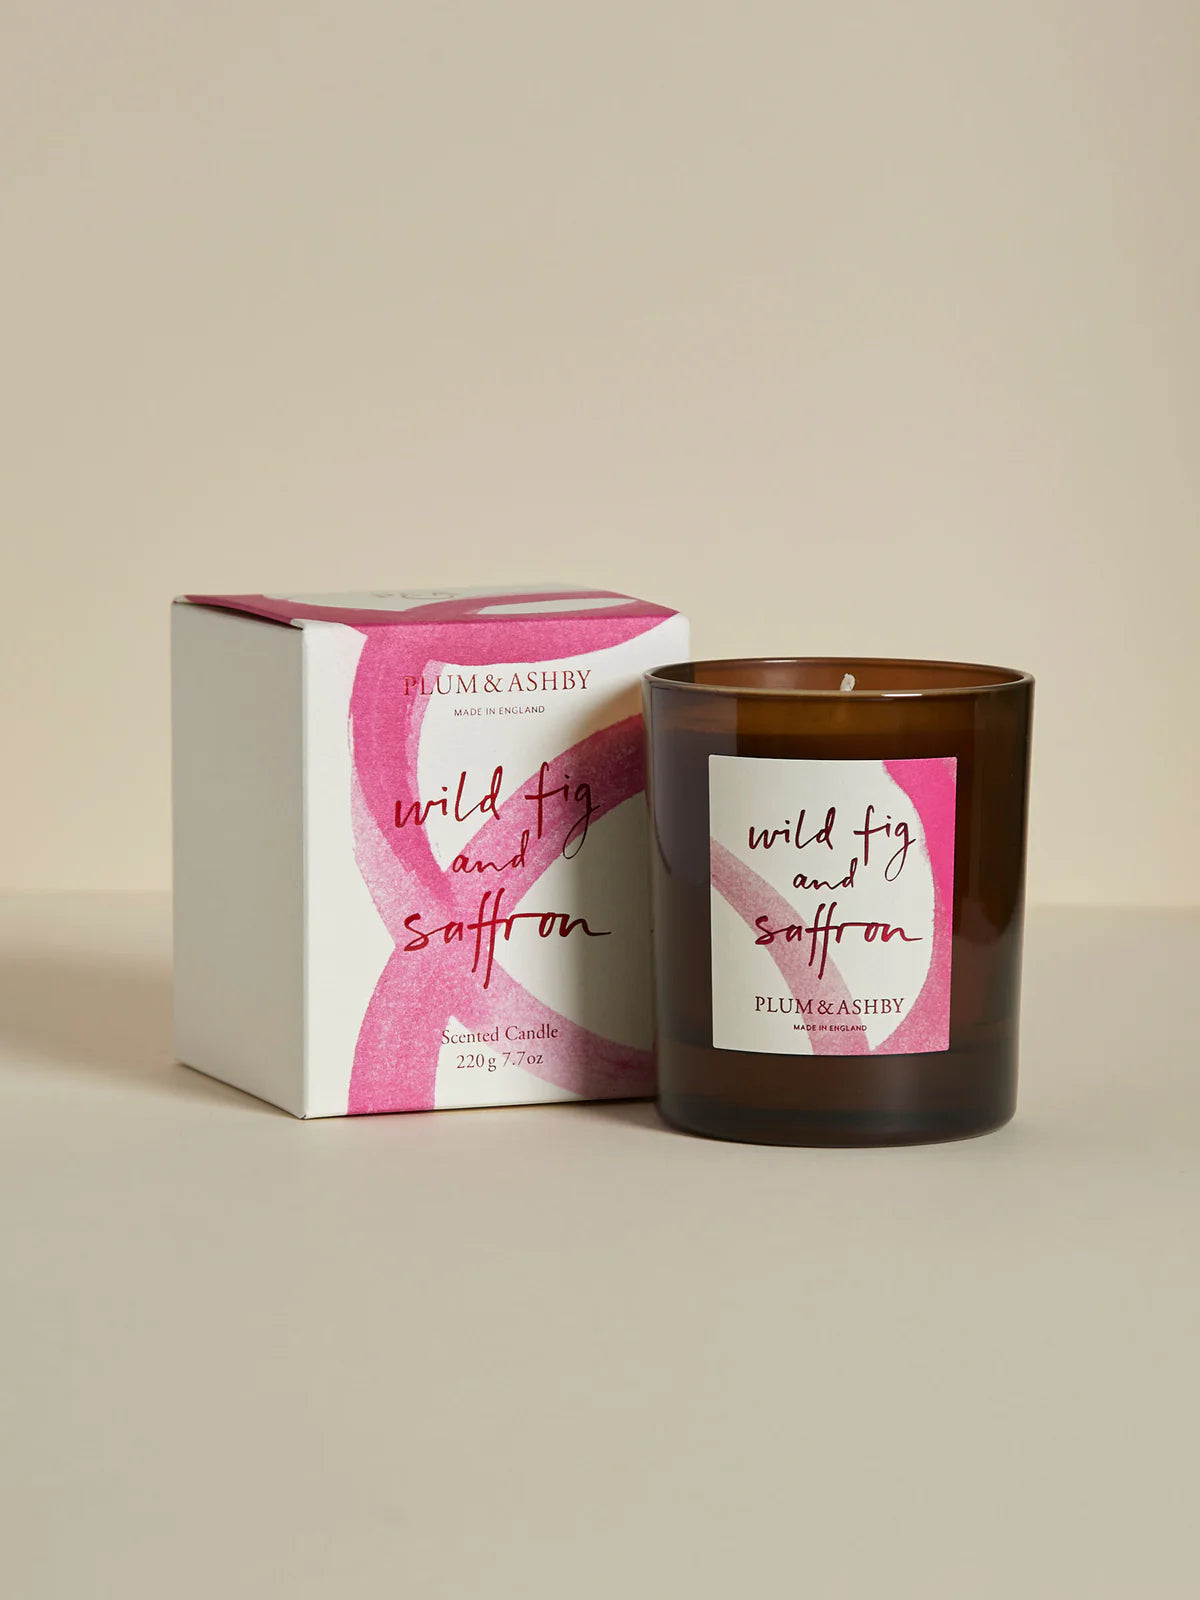 Plum & Ashby Candle | Wild Fig & Saffron Candle Plum & Ashby 